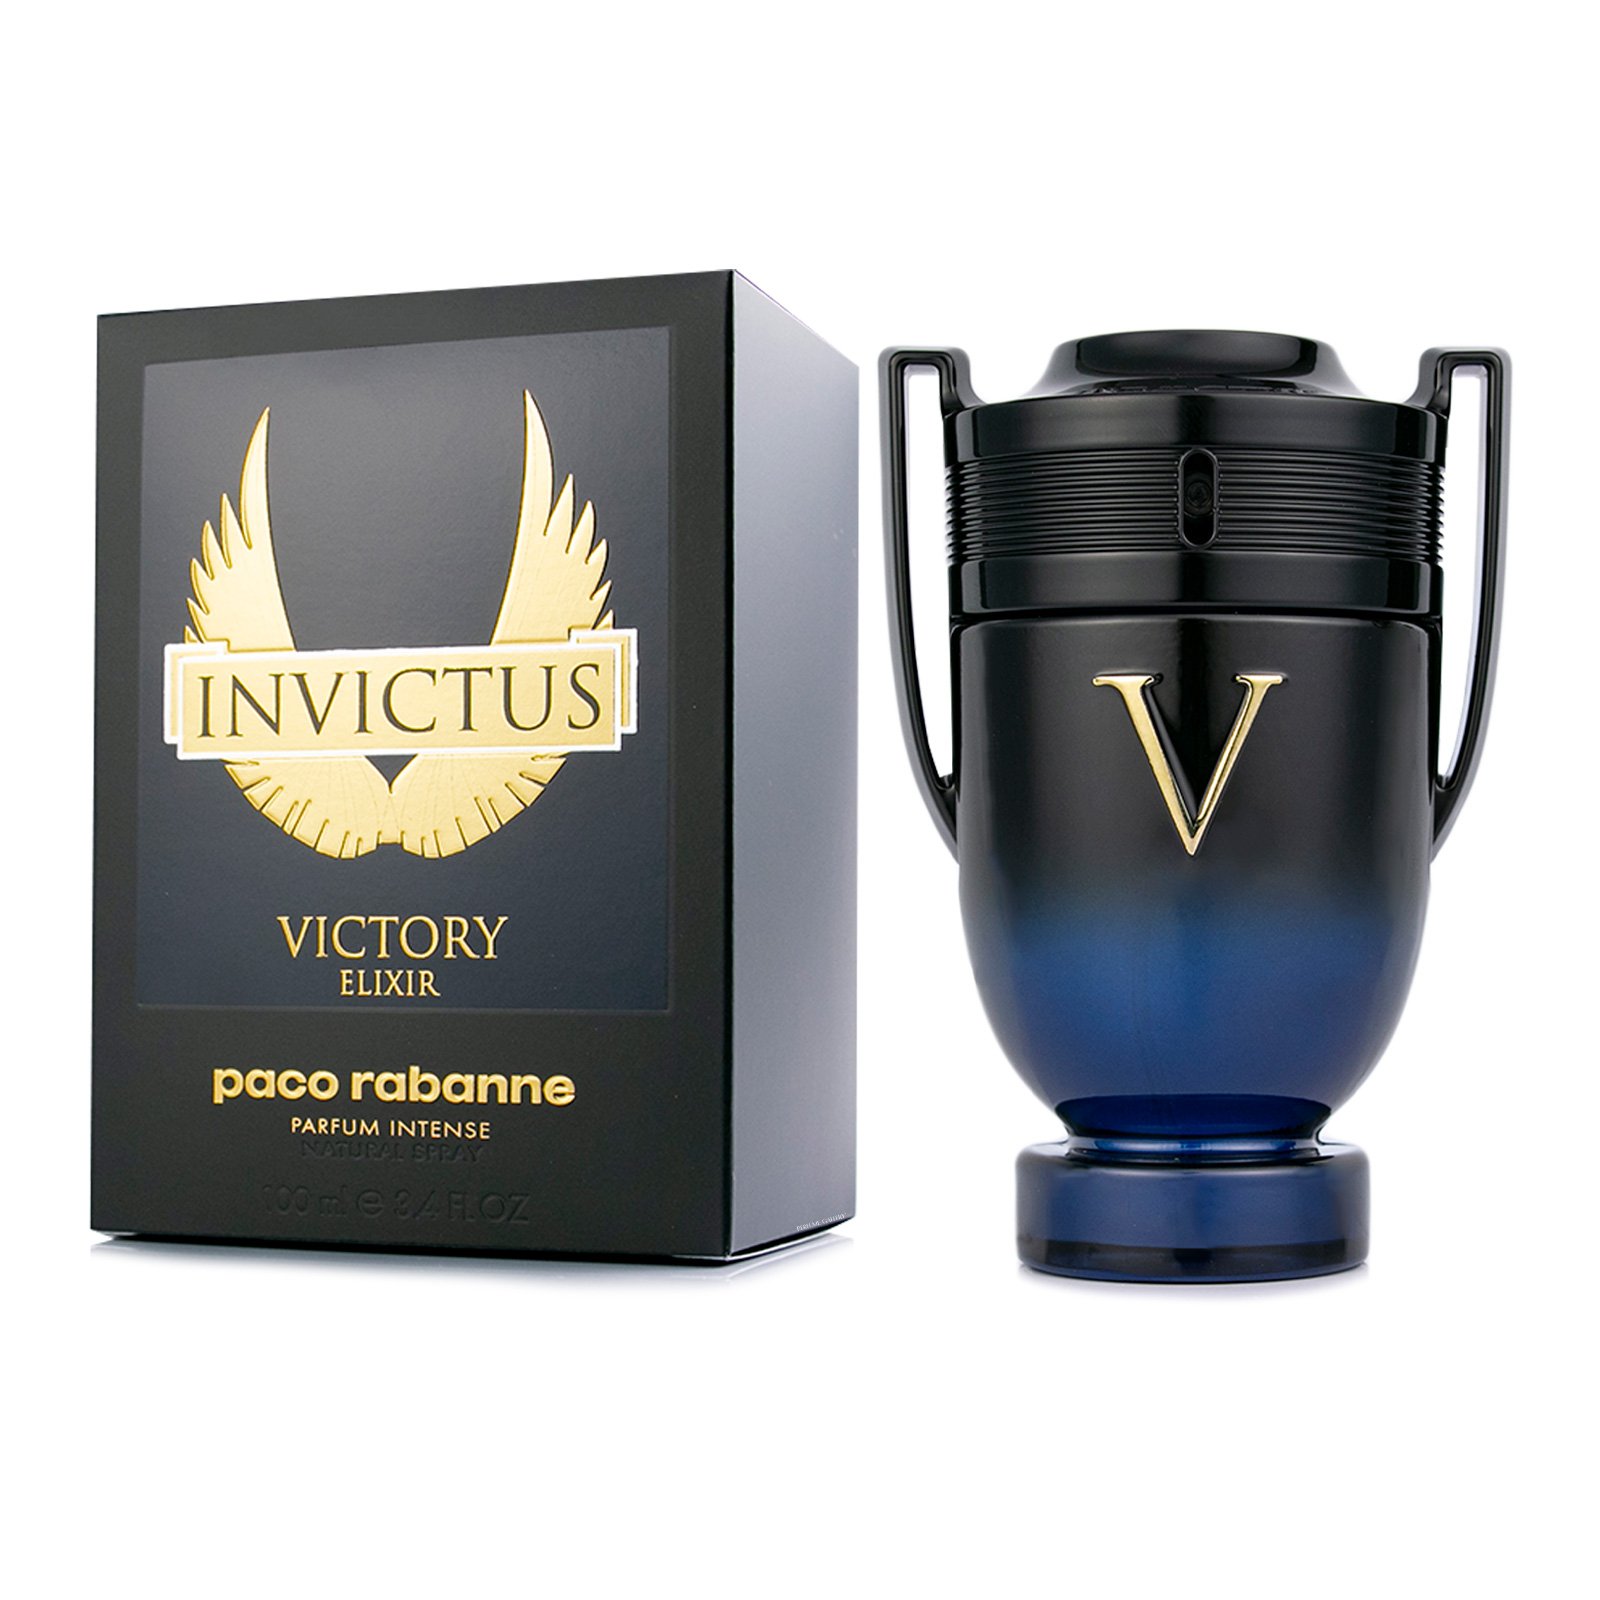 Paco Rabanne Invictus Victory Elixir Parfum 100ml